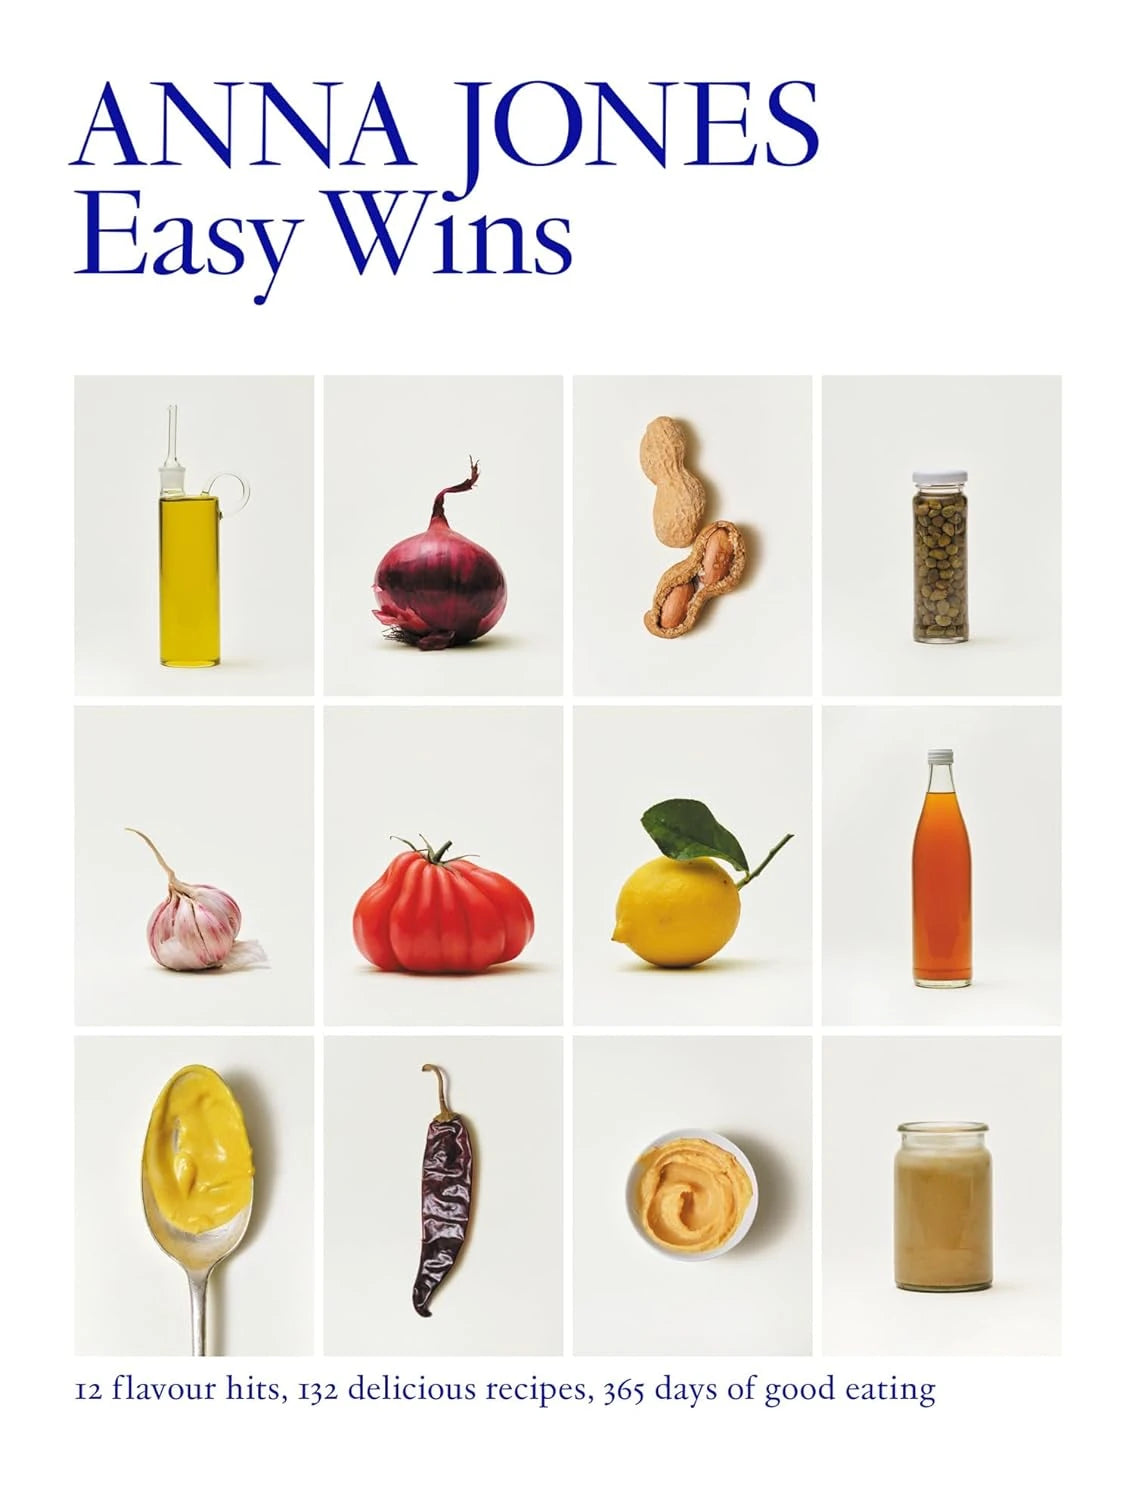 Easy Wins by Anna Jones | Recipe Book